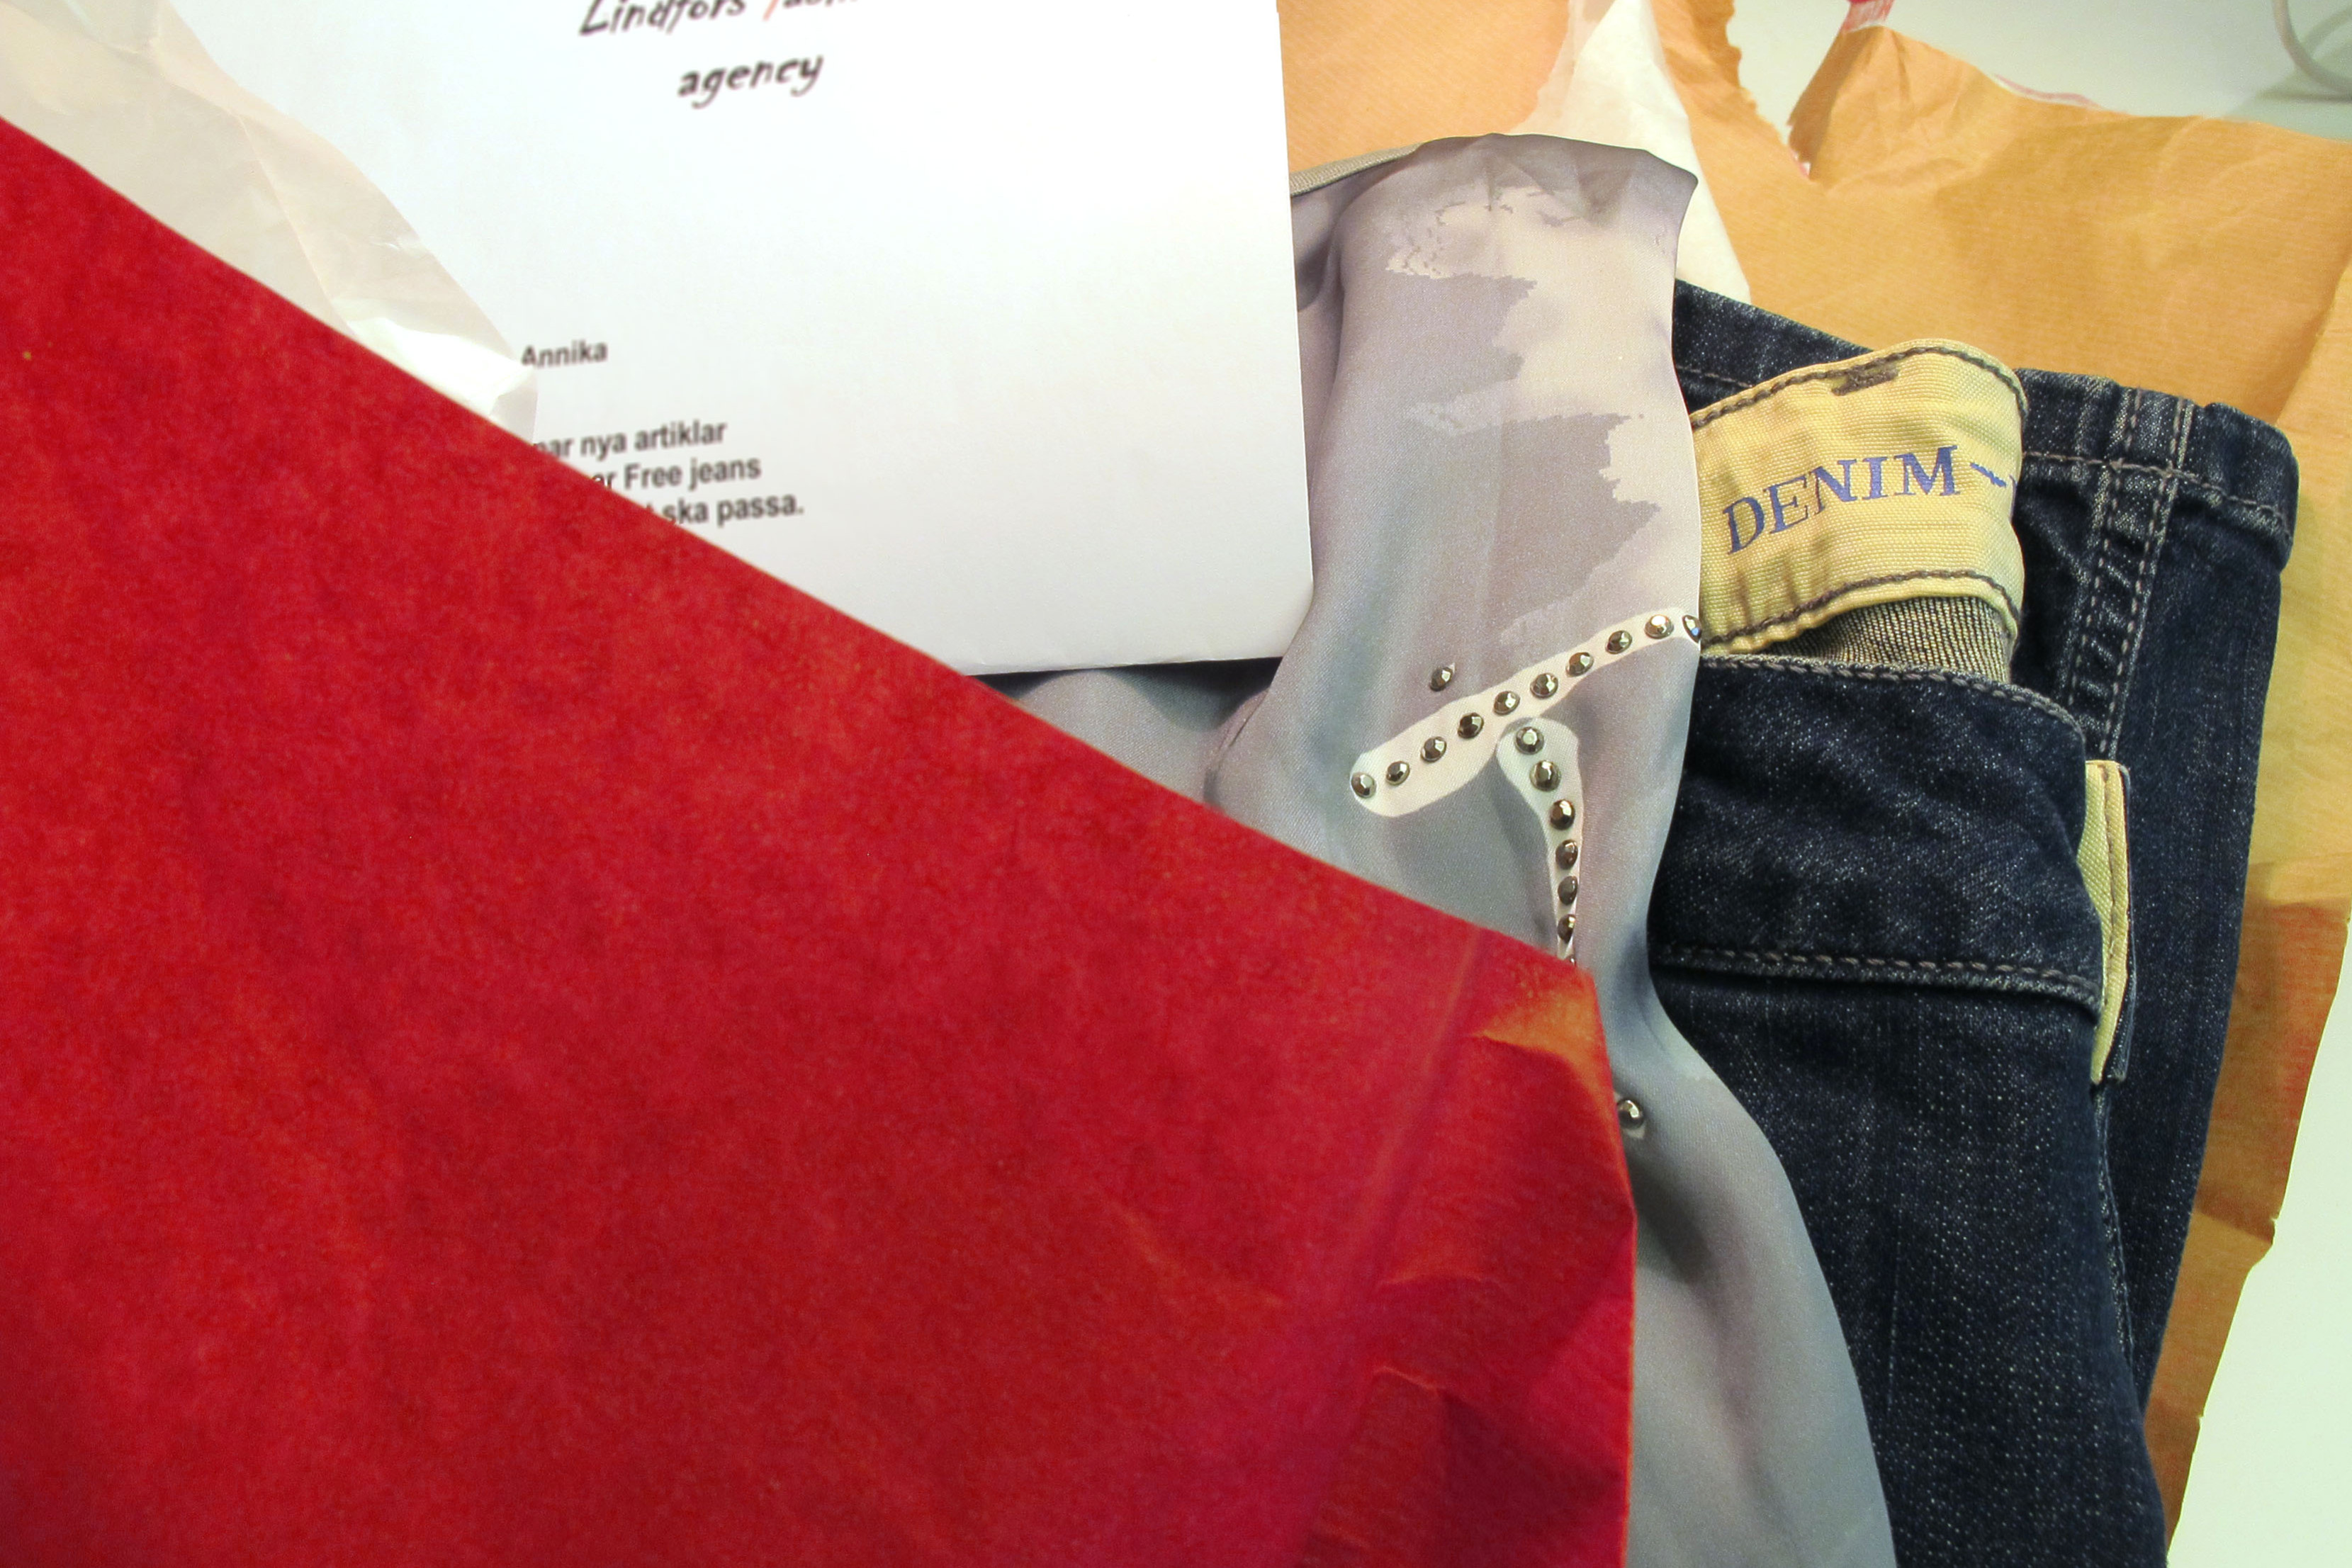 Christmas gift, santa claus, julklapp, lindfors fashion agency, denim hunter, bling, jeans. top